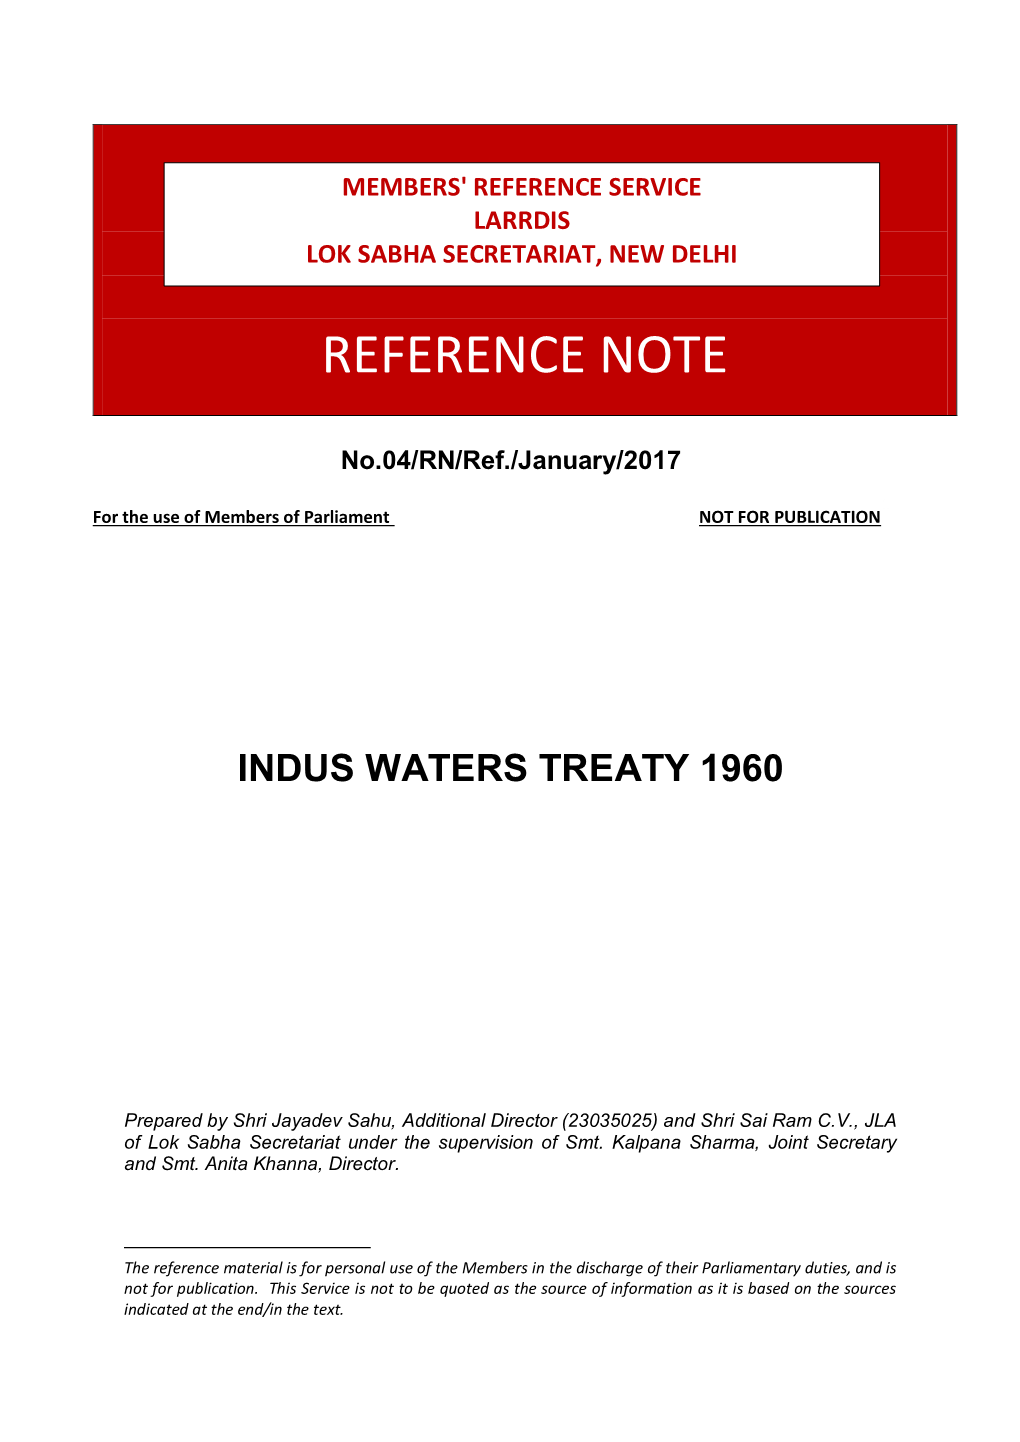 Indus Waters Treaty 1960